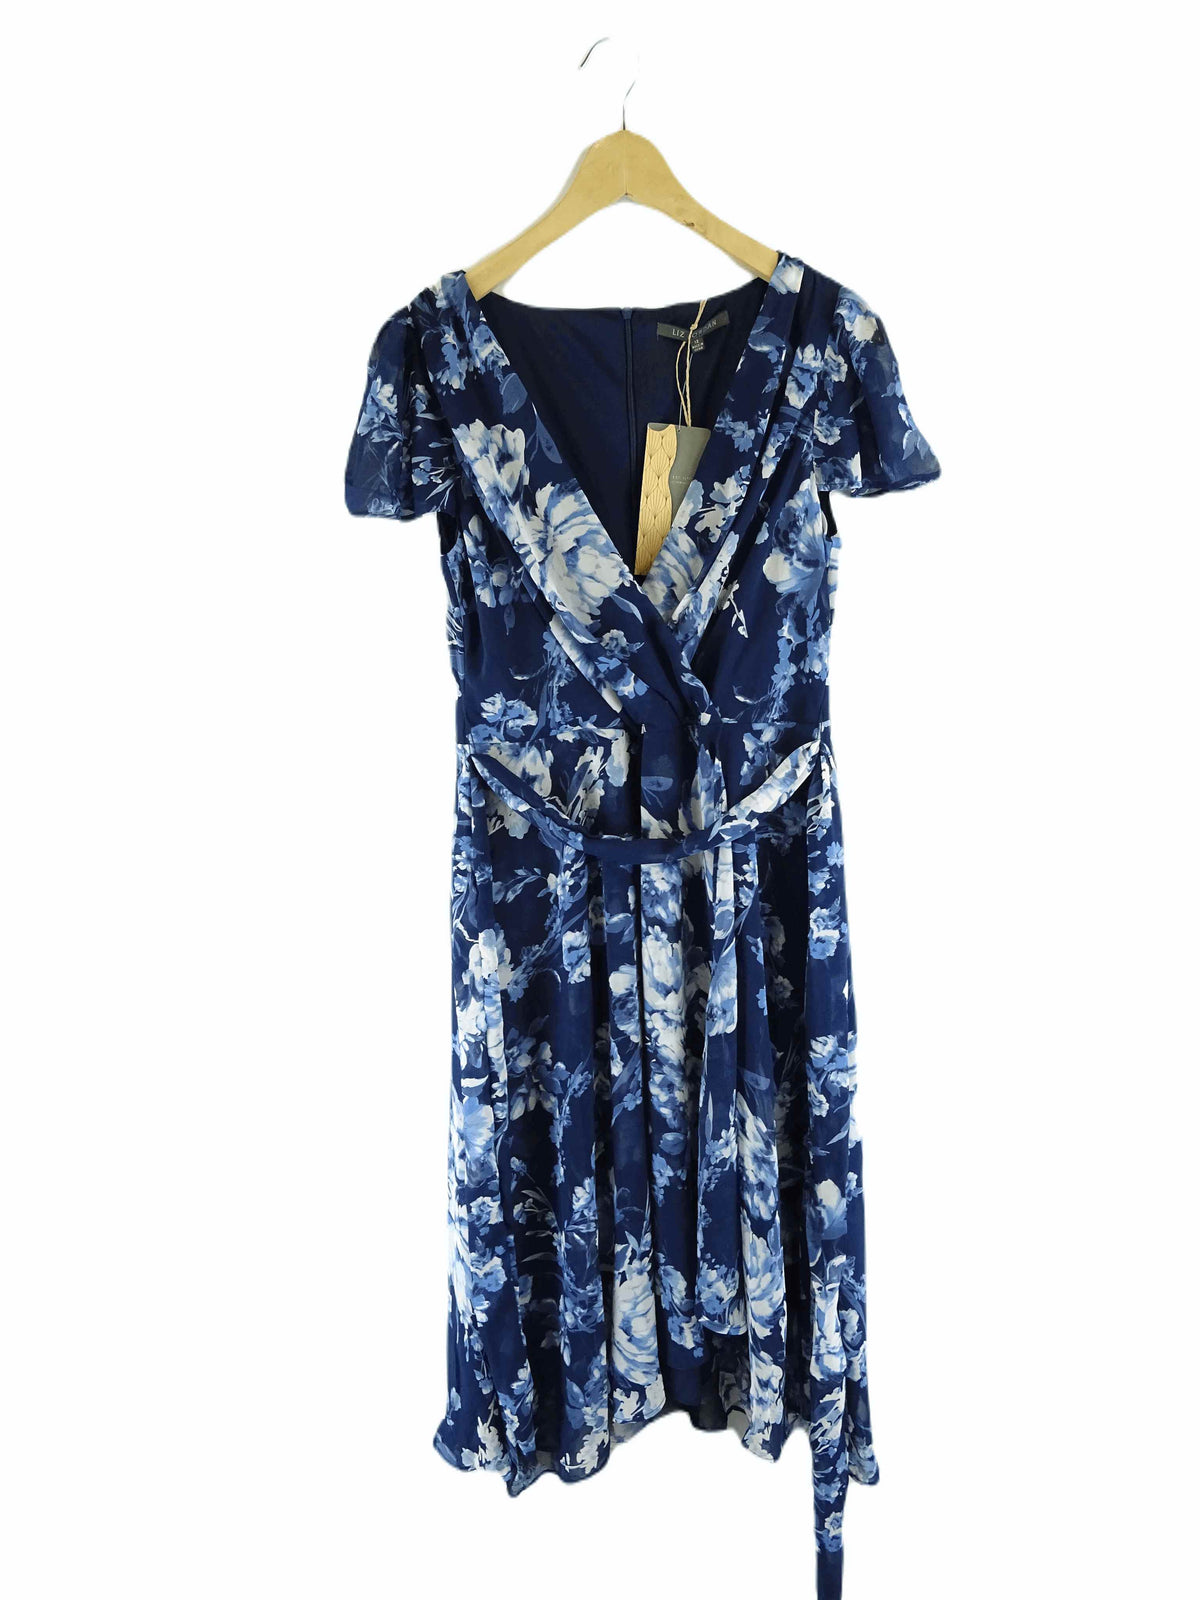 Liz Jordan Blue Floral Dress 12